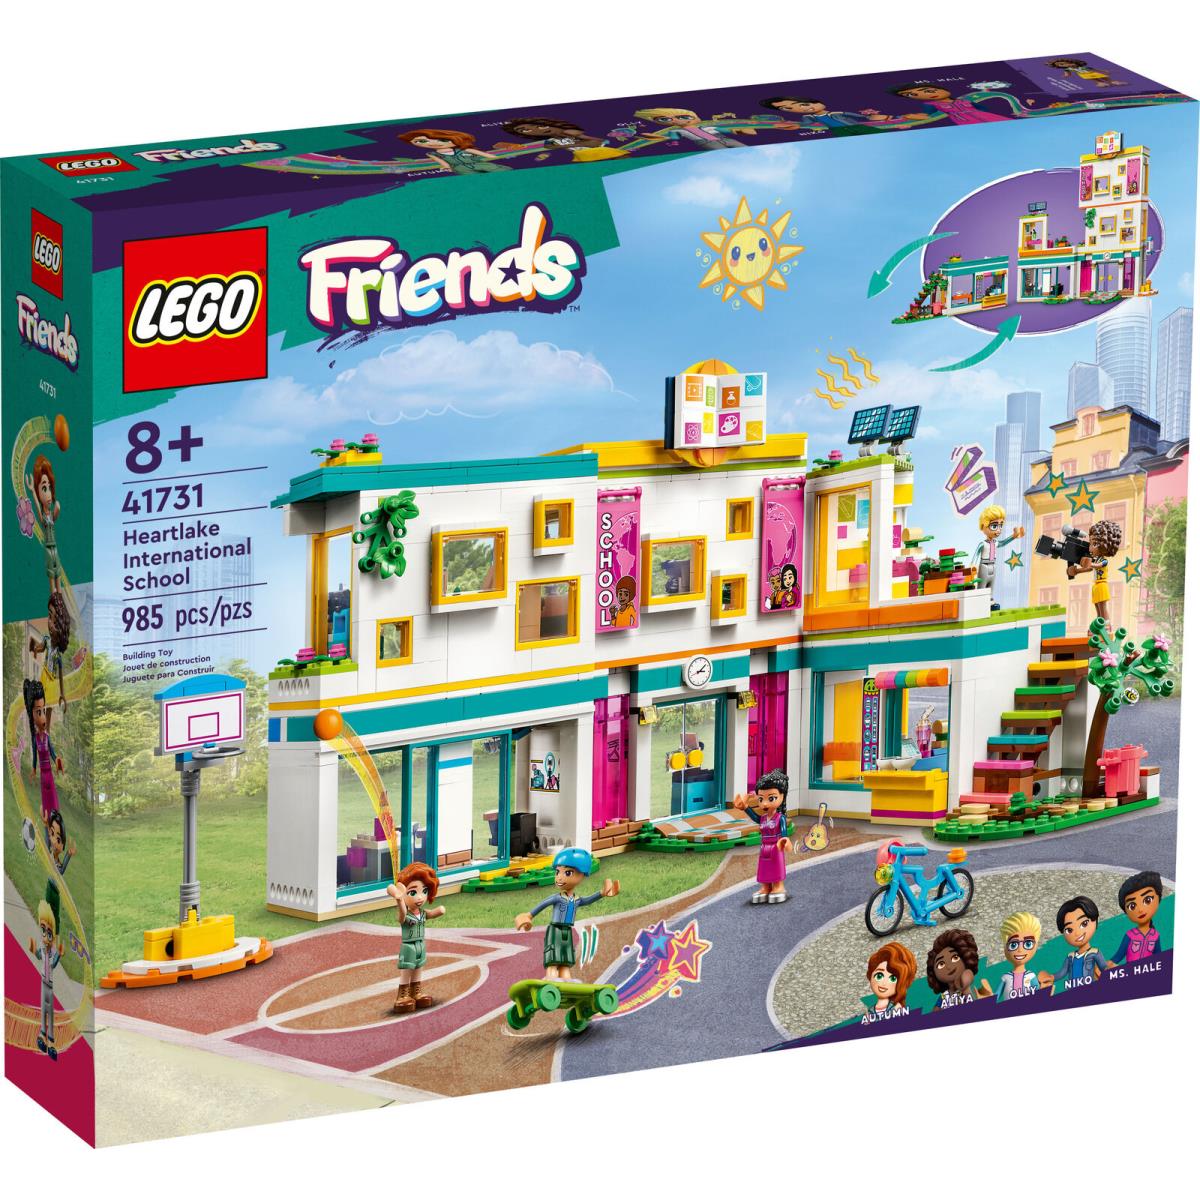 Lego Friends Heartlake International School 41731 Building Toy Set Gift